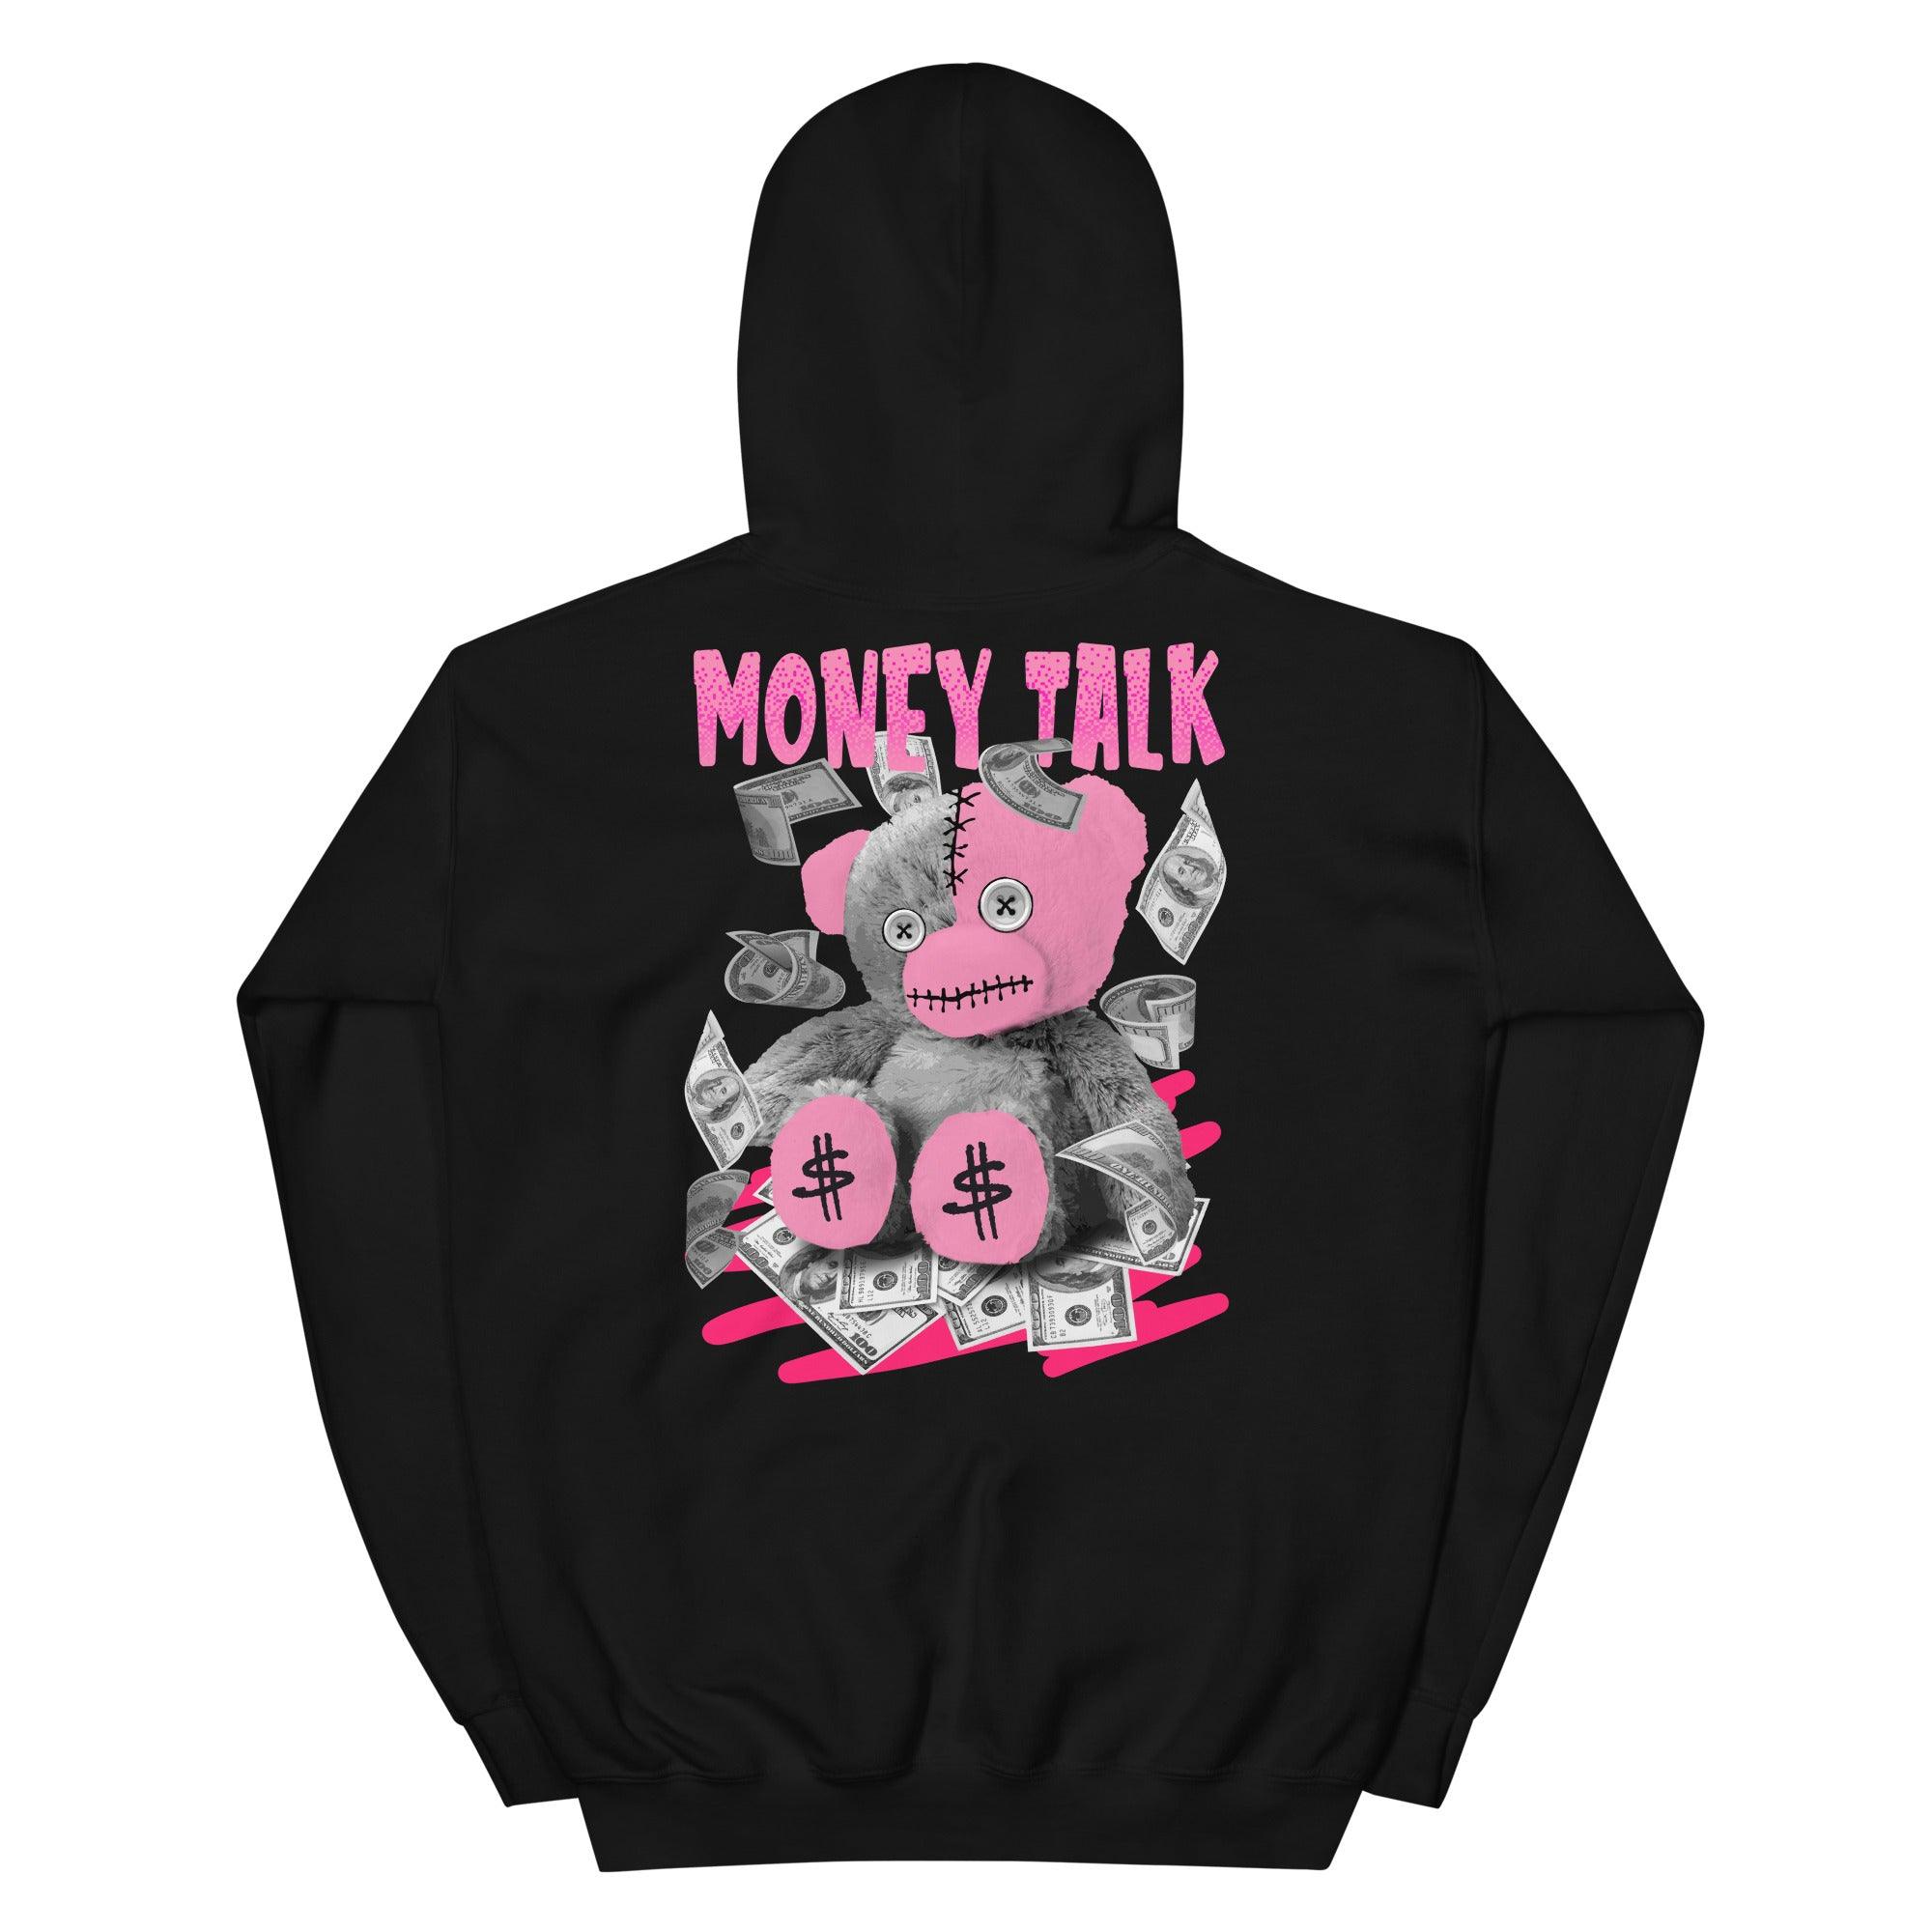 Money Talk Bear Sneaker Sweatshirt AJ 14s Low Shocking Pink photo